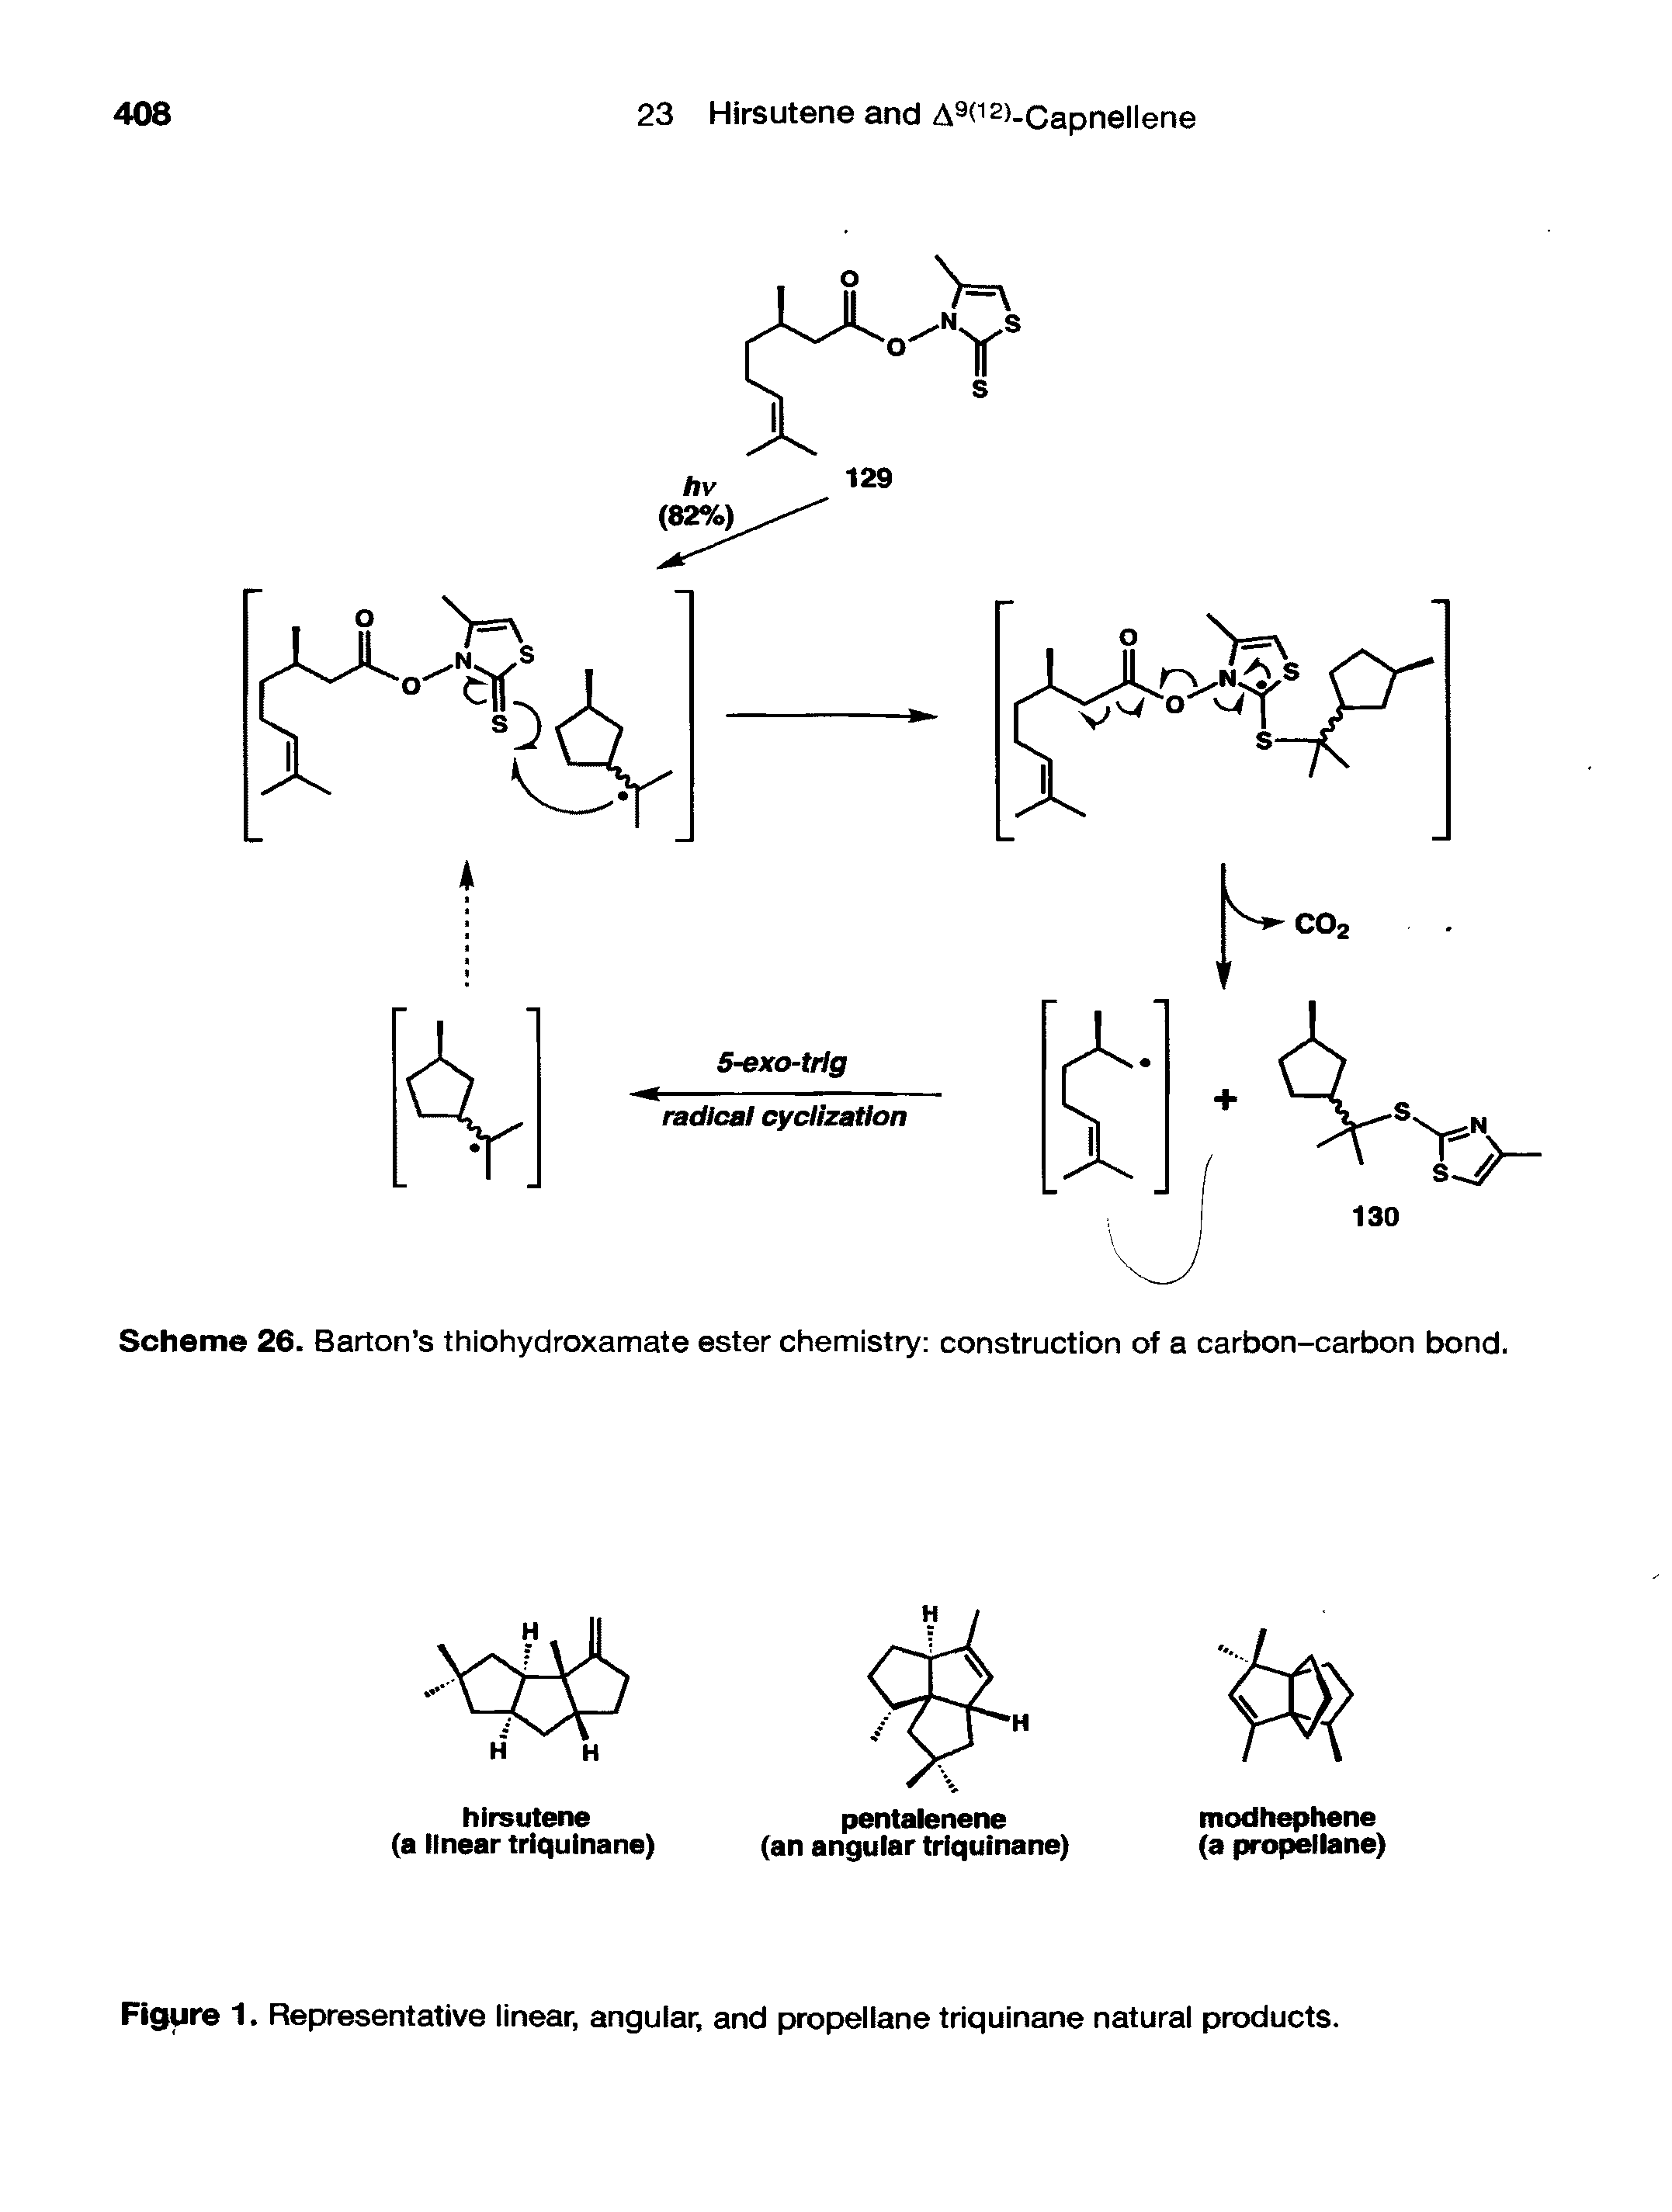 Figure 1. Representative linear, angular, and propellane triquinane natural products.